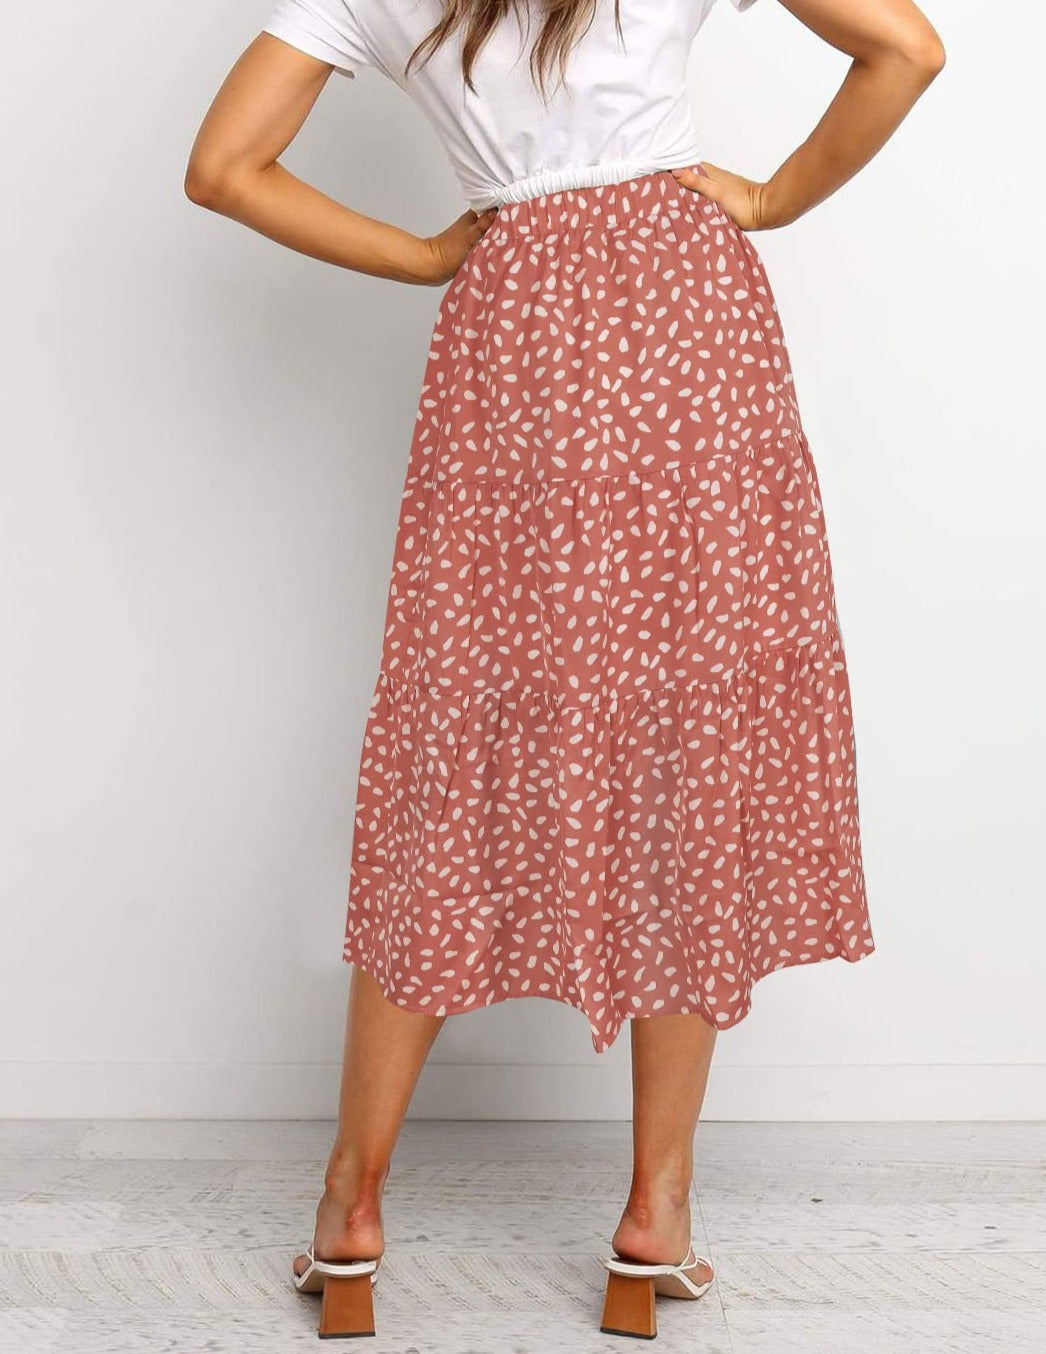 Women's Boho Leopard Print Skirt Pleated A-Line Swing Midi Skirts DarkPink Medium